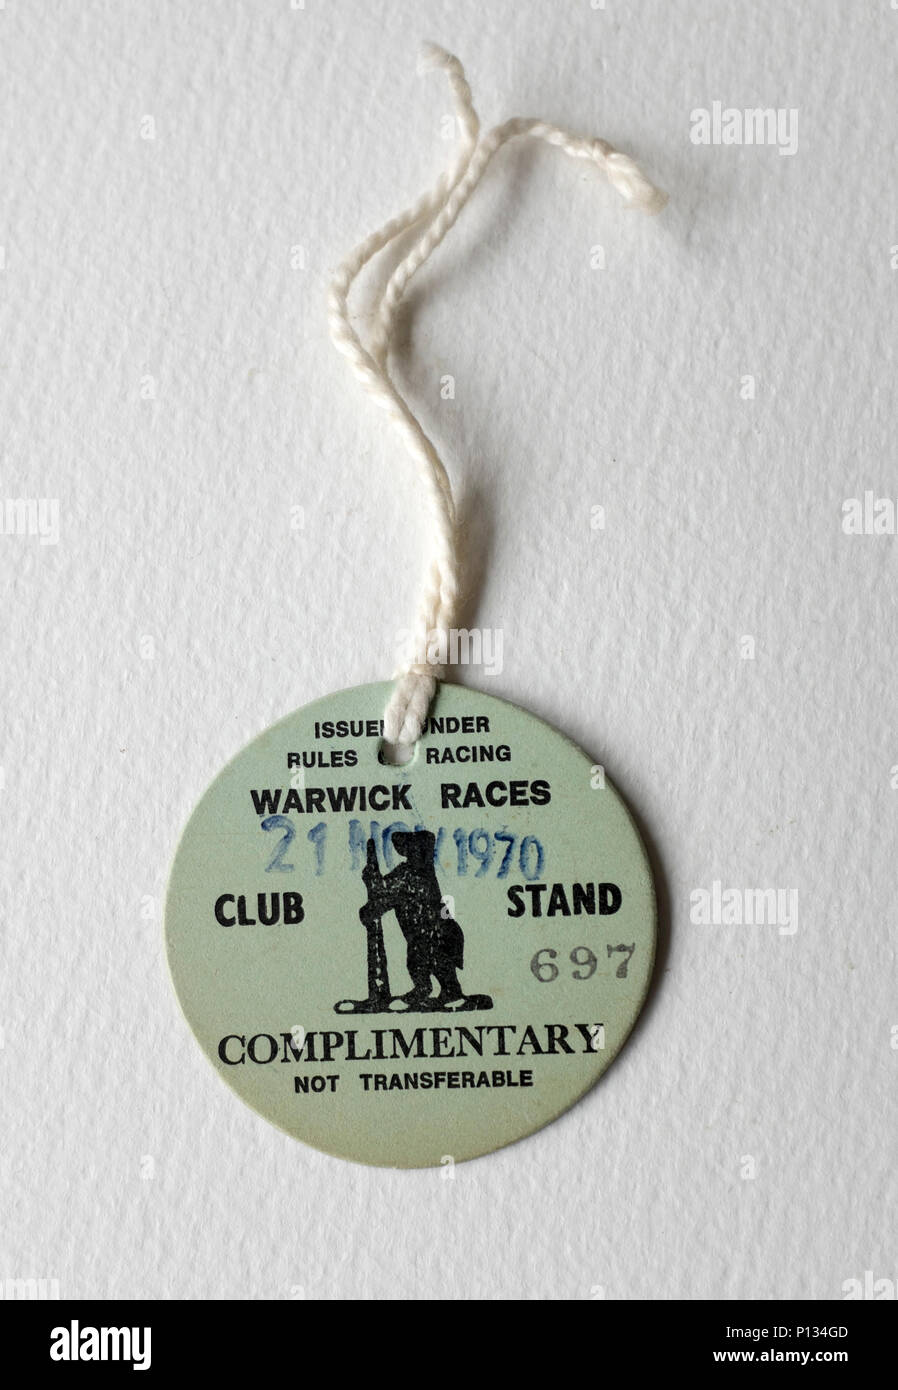 Vintage Warwick Races Racecourse Entry Badge Tag Stock Photo